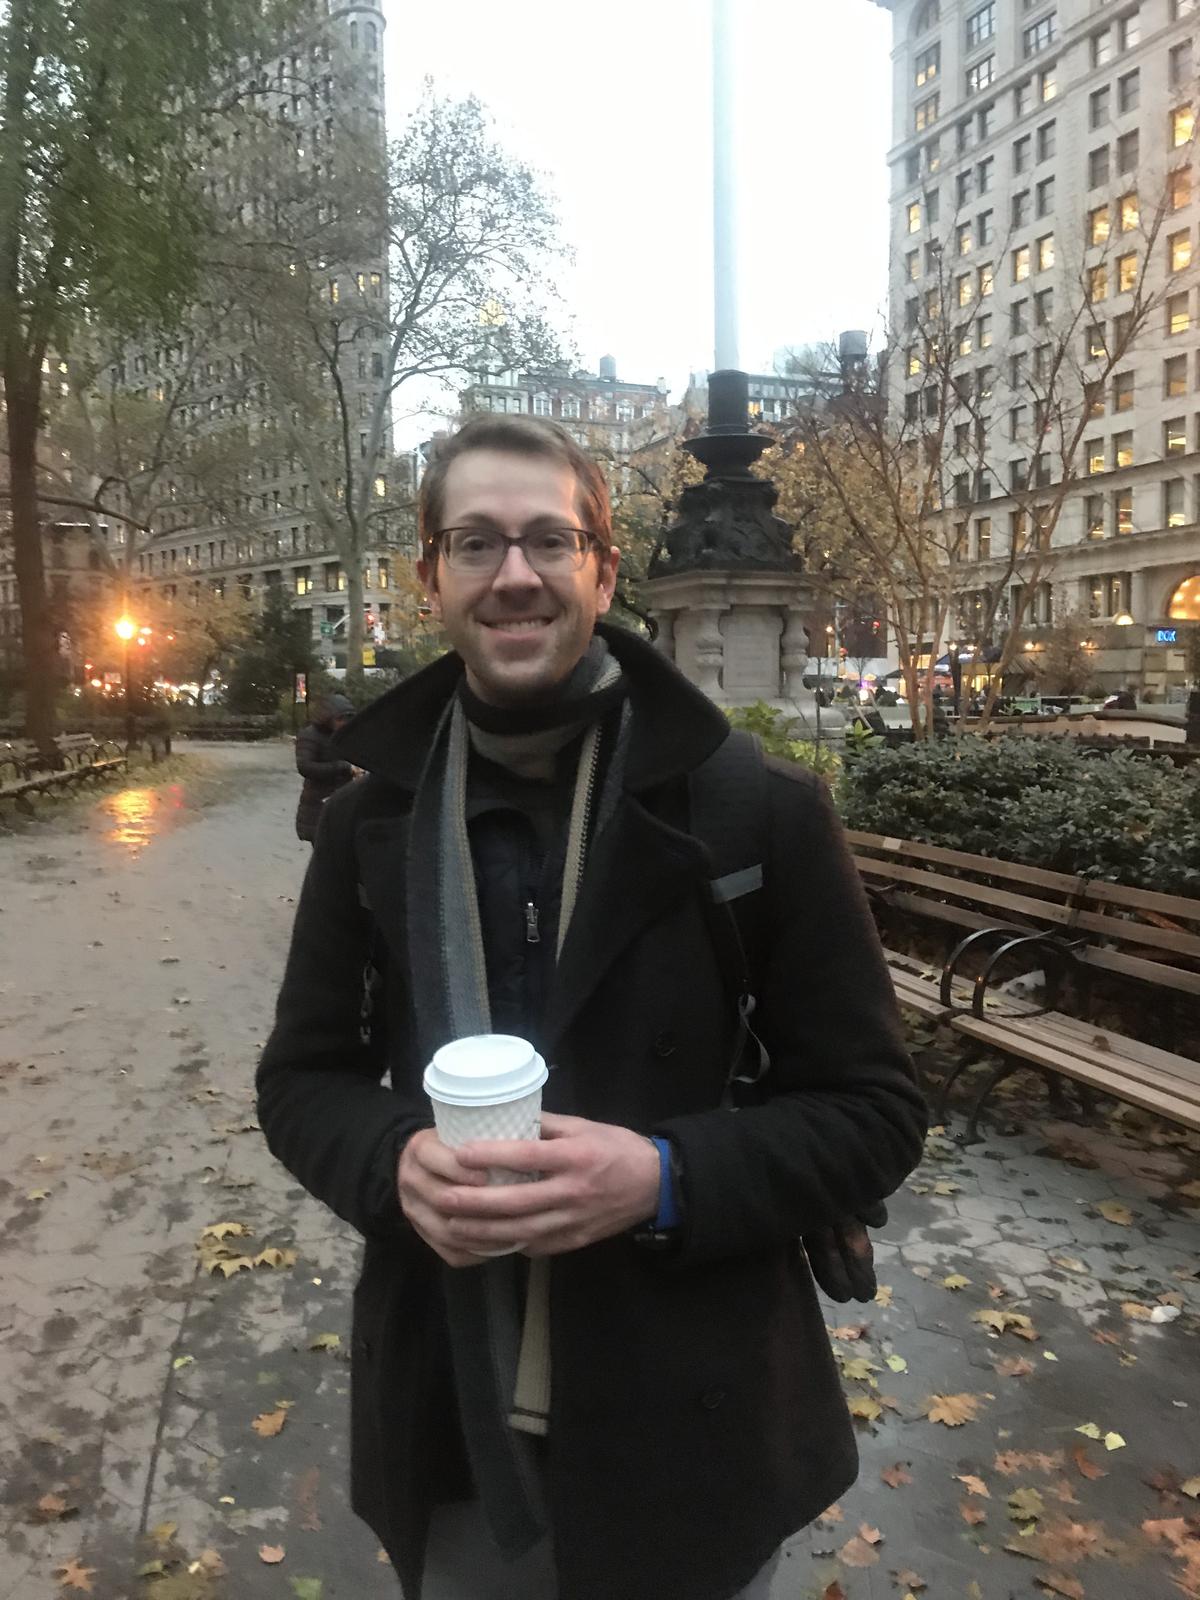 Tim Gemperline in Madison Square Park, New York, on Nov. 16, 2018. (Stuart Liess/The Epoch Times)